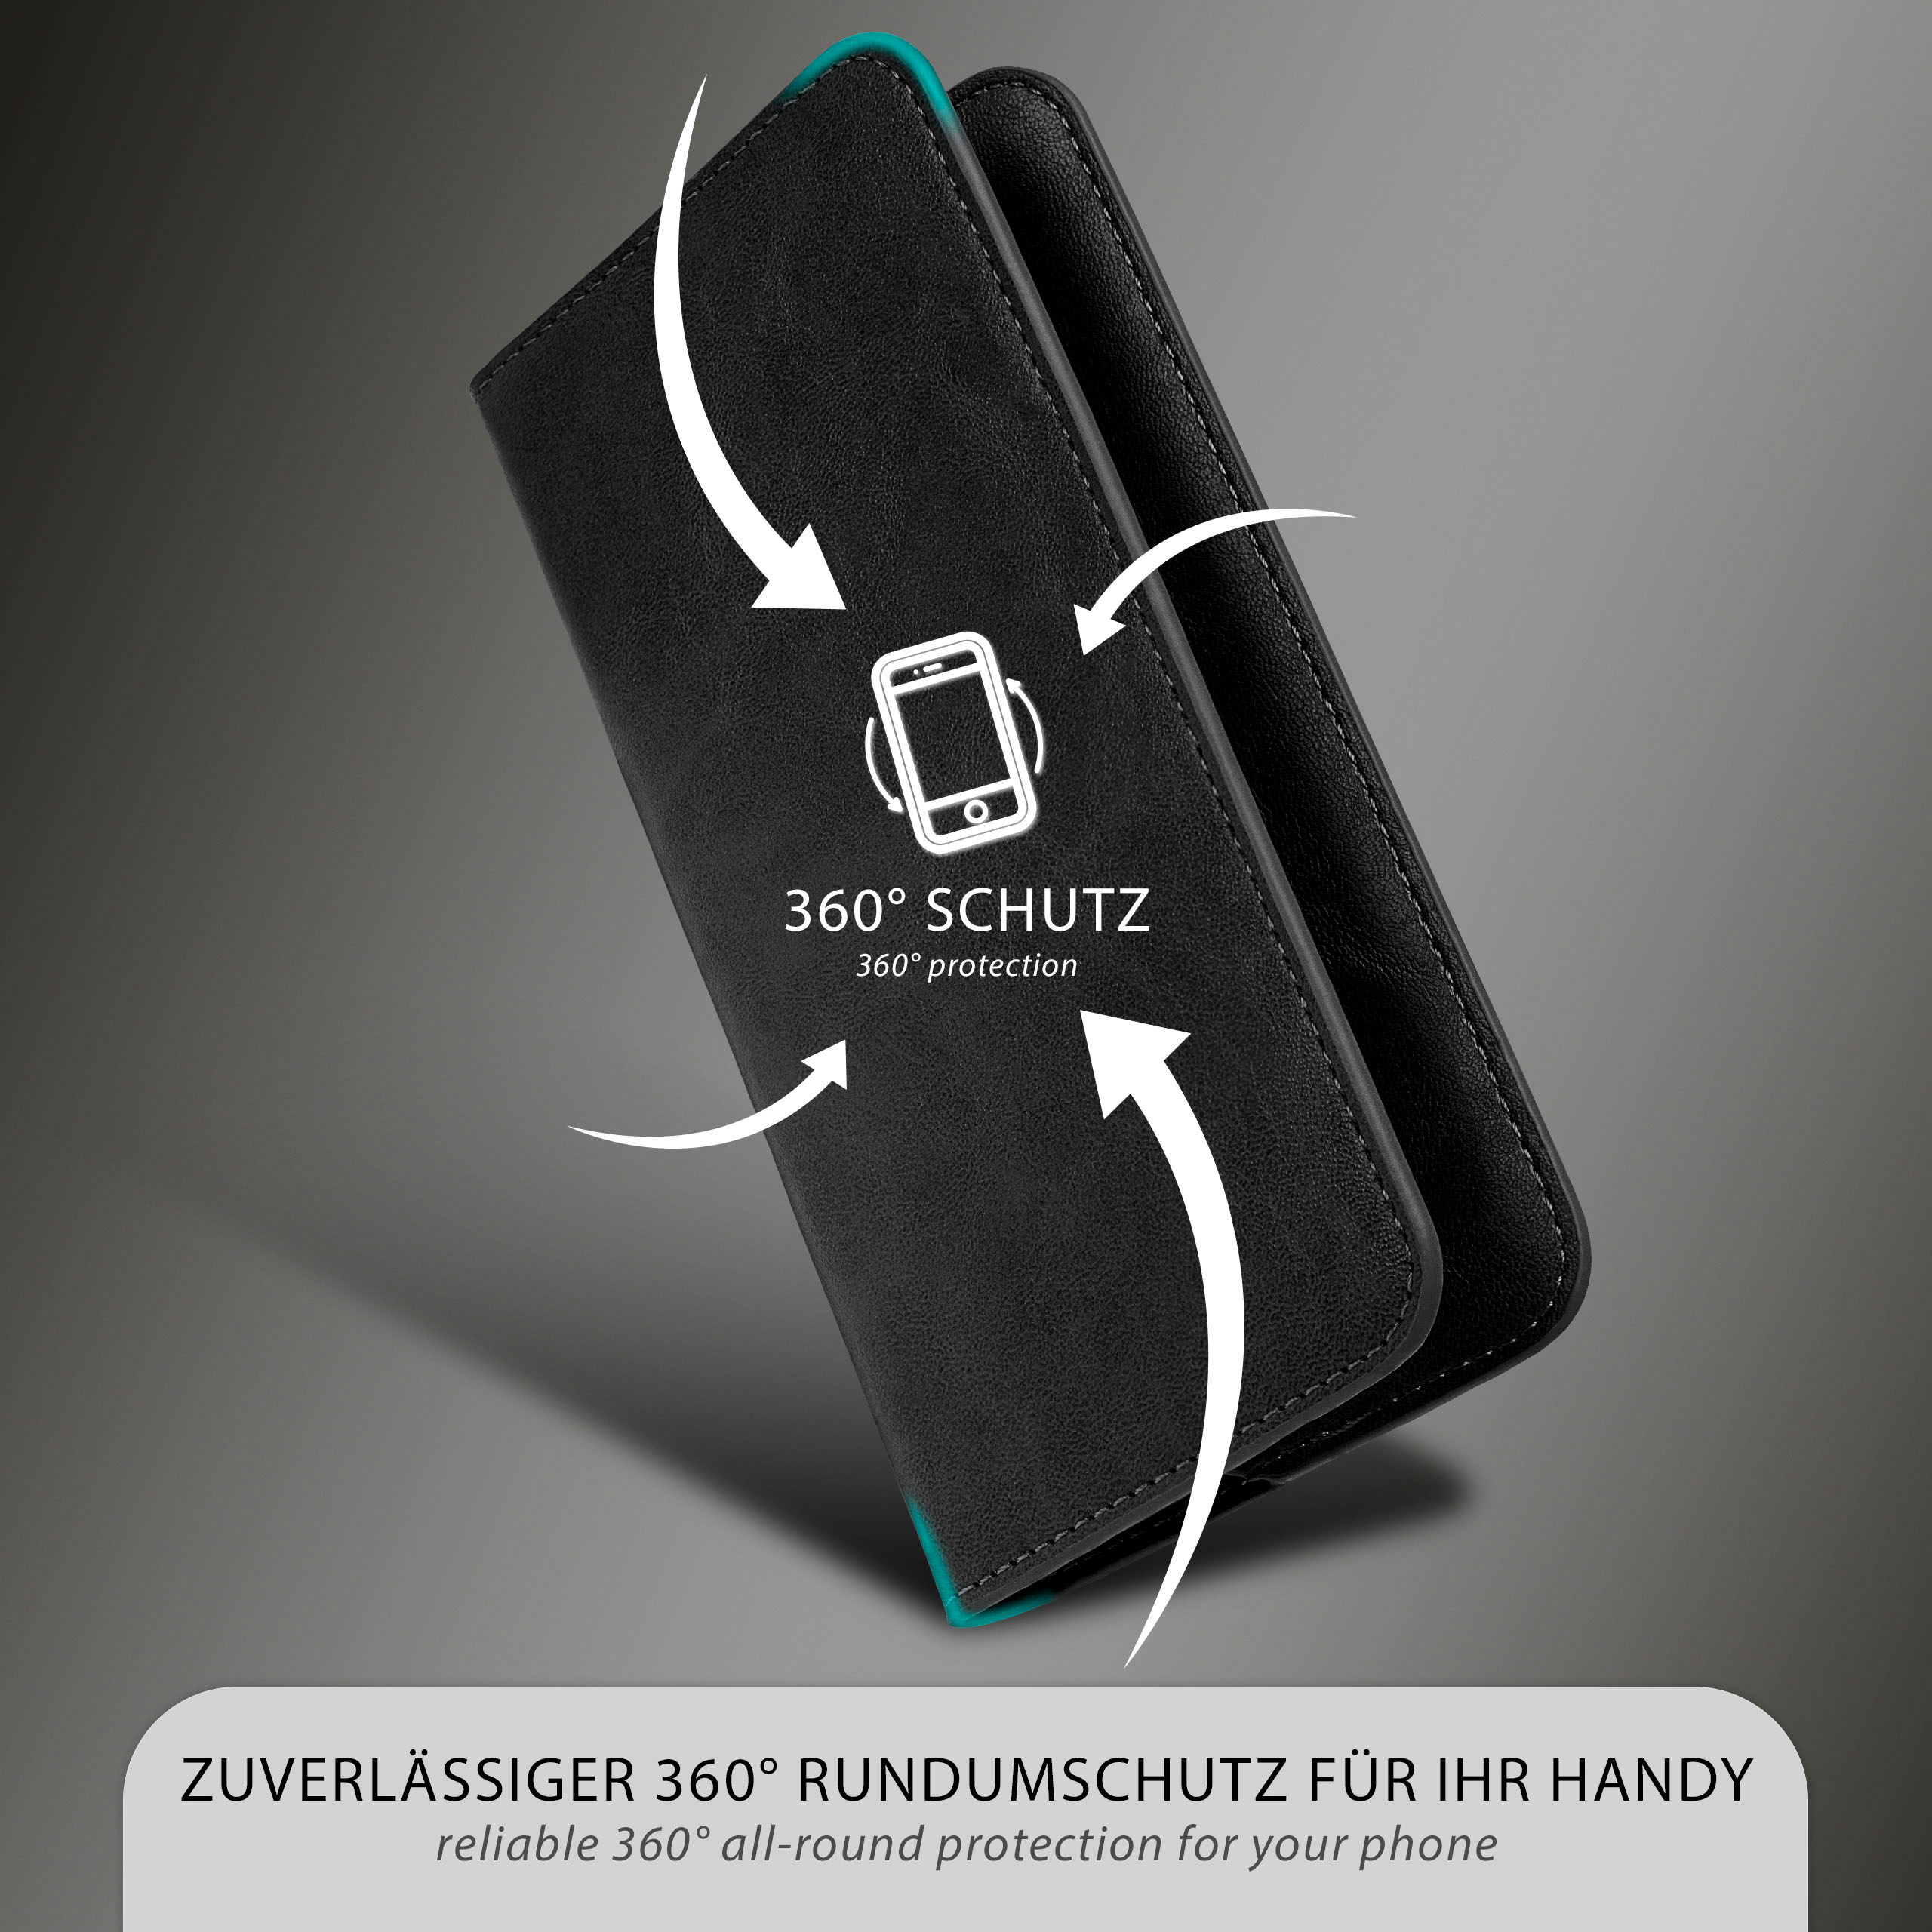 MOEX Case, A9s, Cover, One HTC, Purse Flip Schwarz